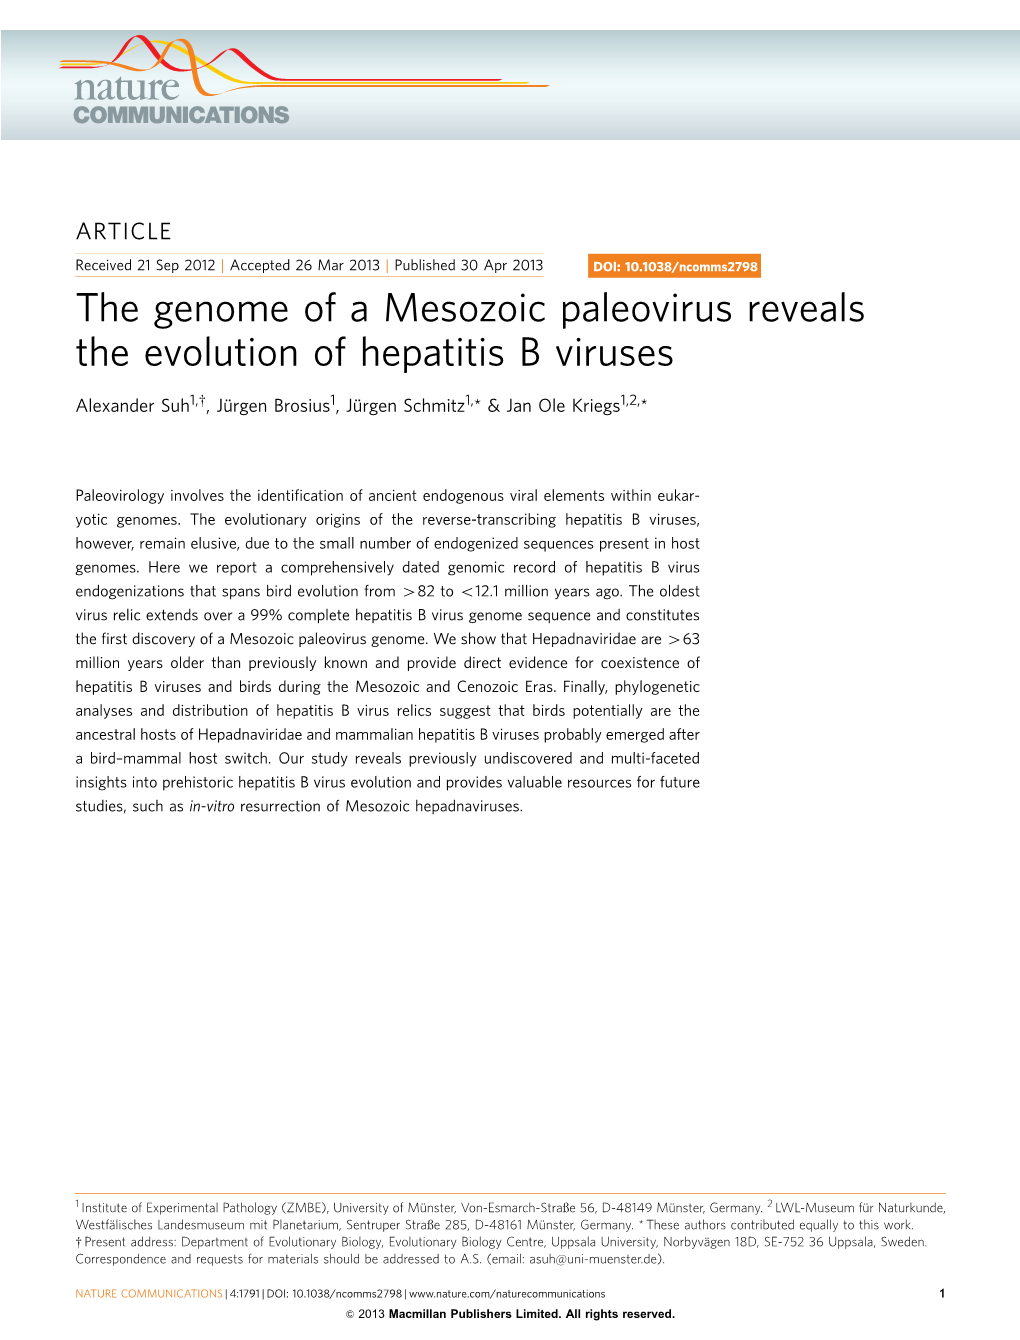 The Genome of a Mesozoic Paleovirus Reveals the Evolution of Hepatitis B Viruses